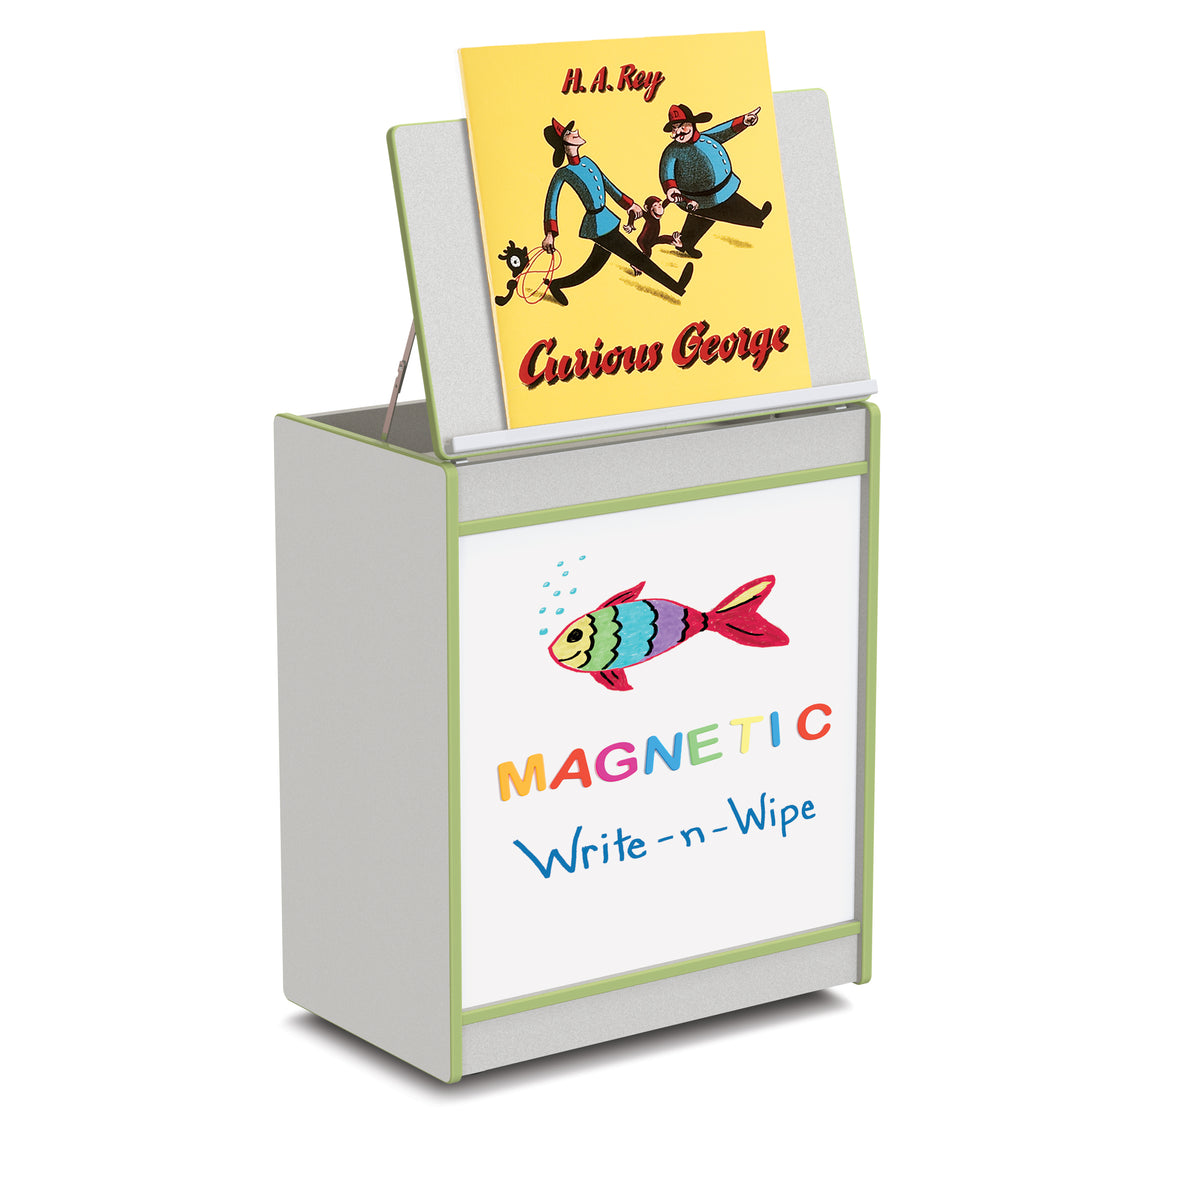 0543JCMG130, Rainbow Accents Big Book Easel - Magnetic Write-n-Wipe - Key Lime Green